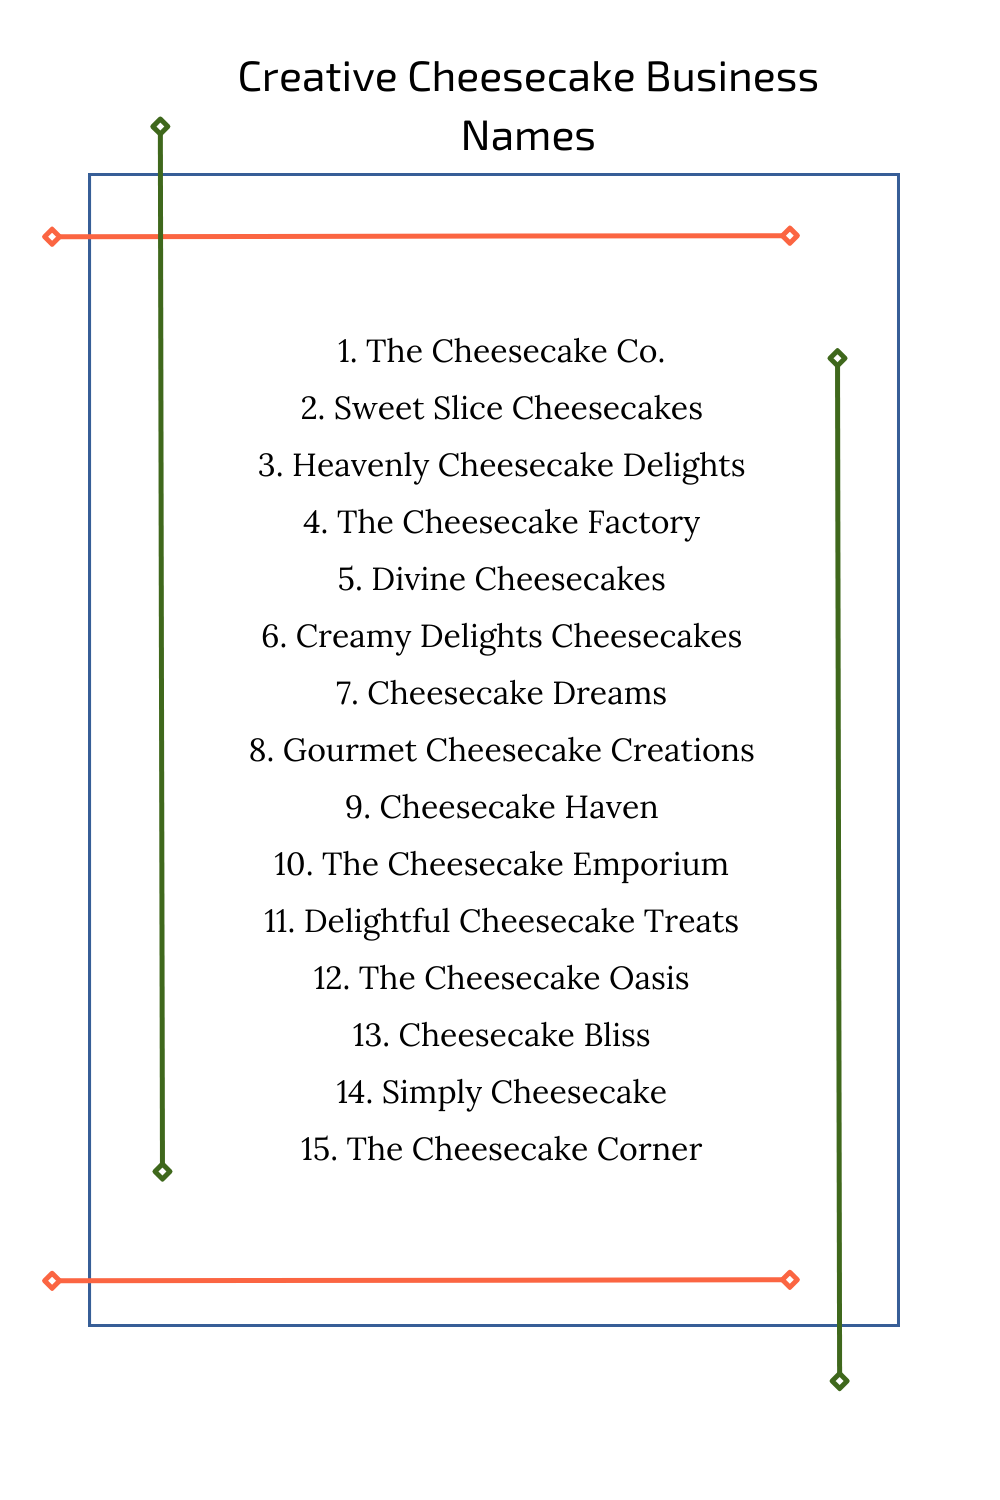 Creative Cheesecake Business Names